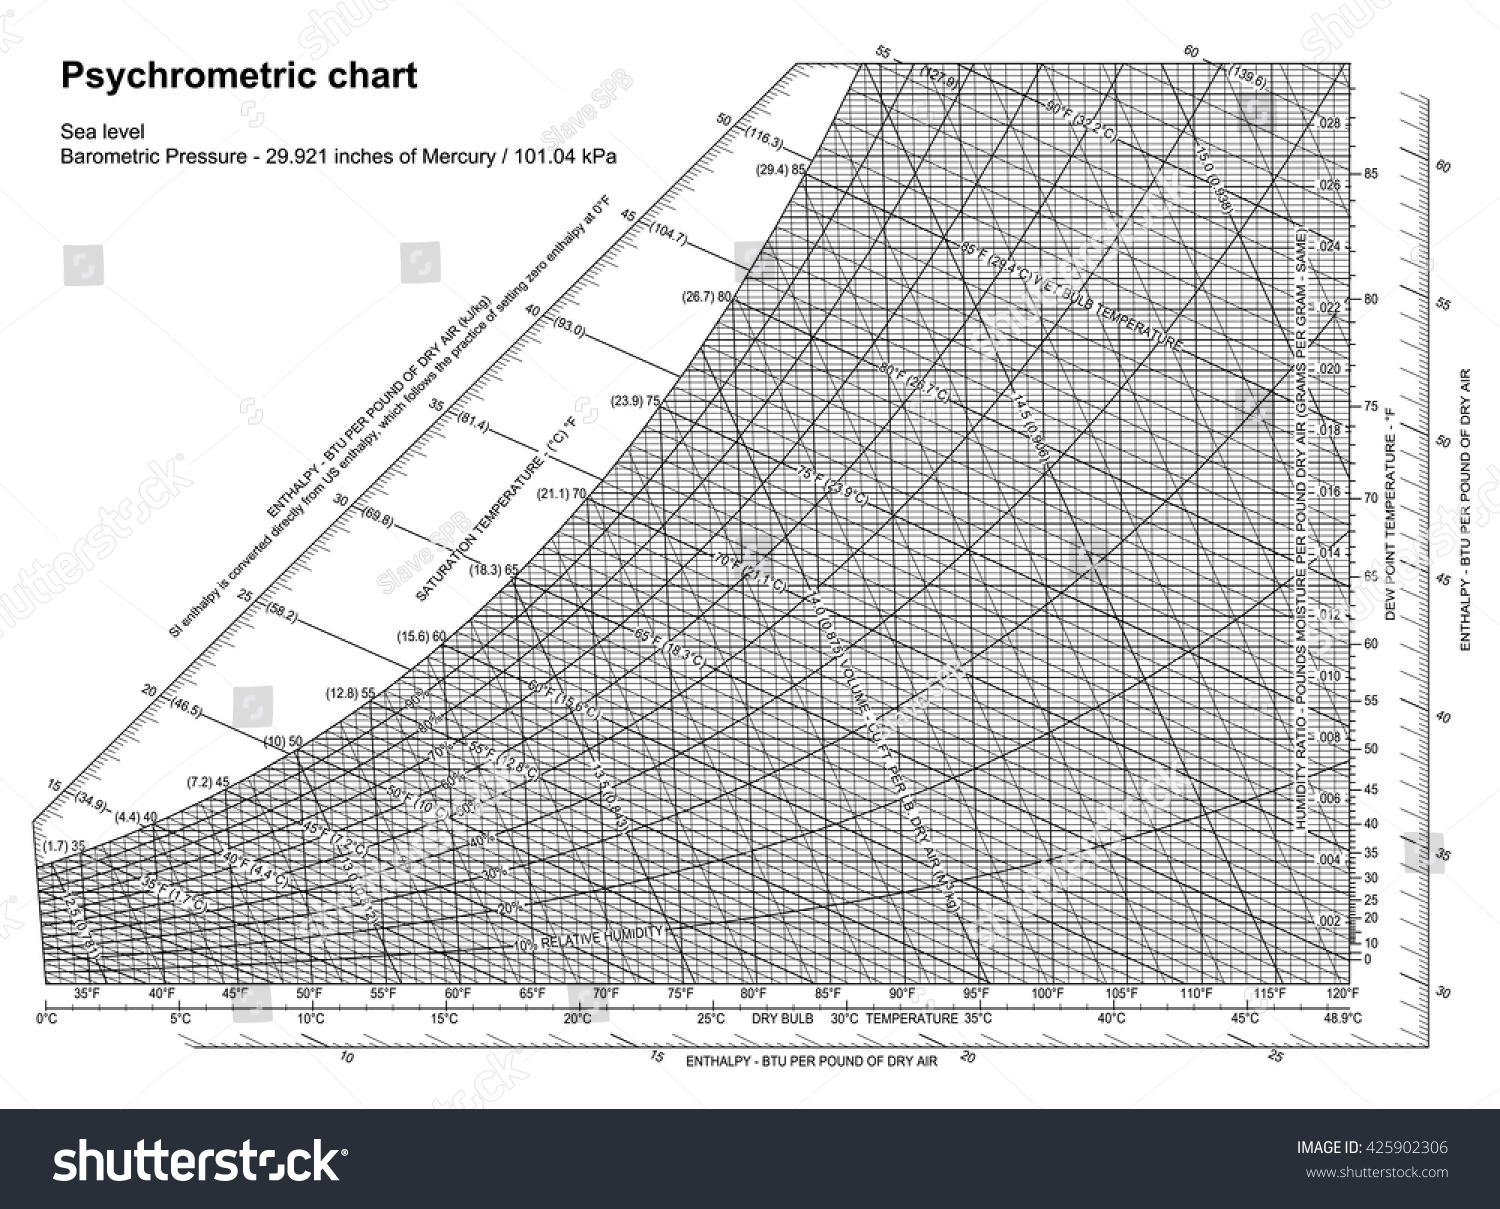 Psychrometric Chart Download